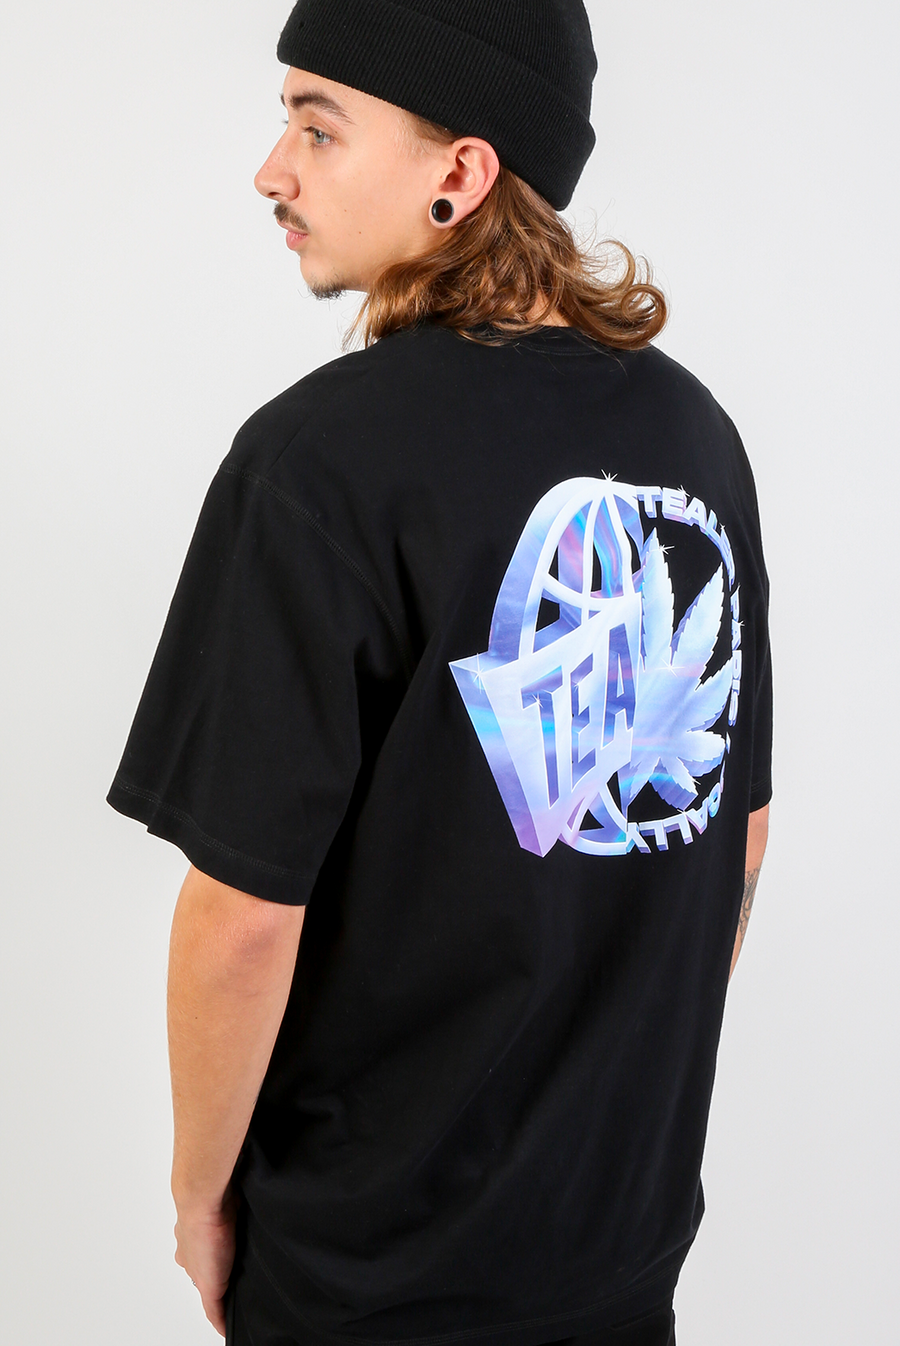 T-shirt Tealer WORLDWIDE, Tee Black